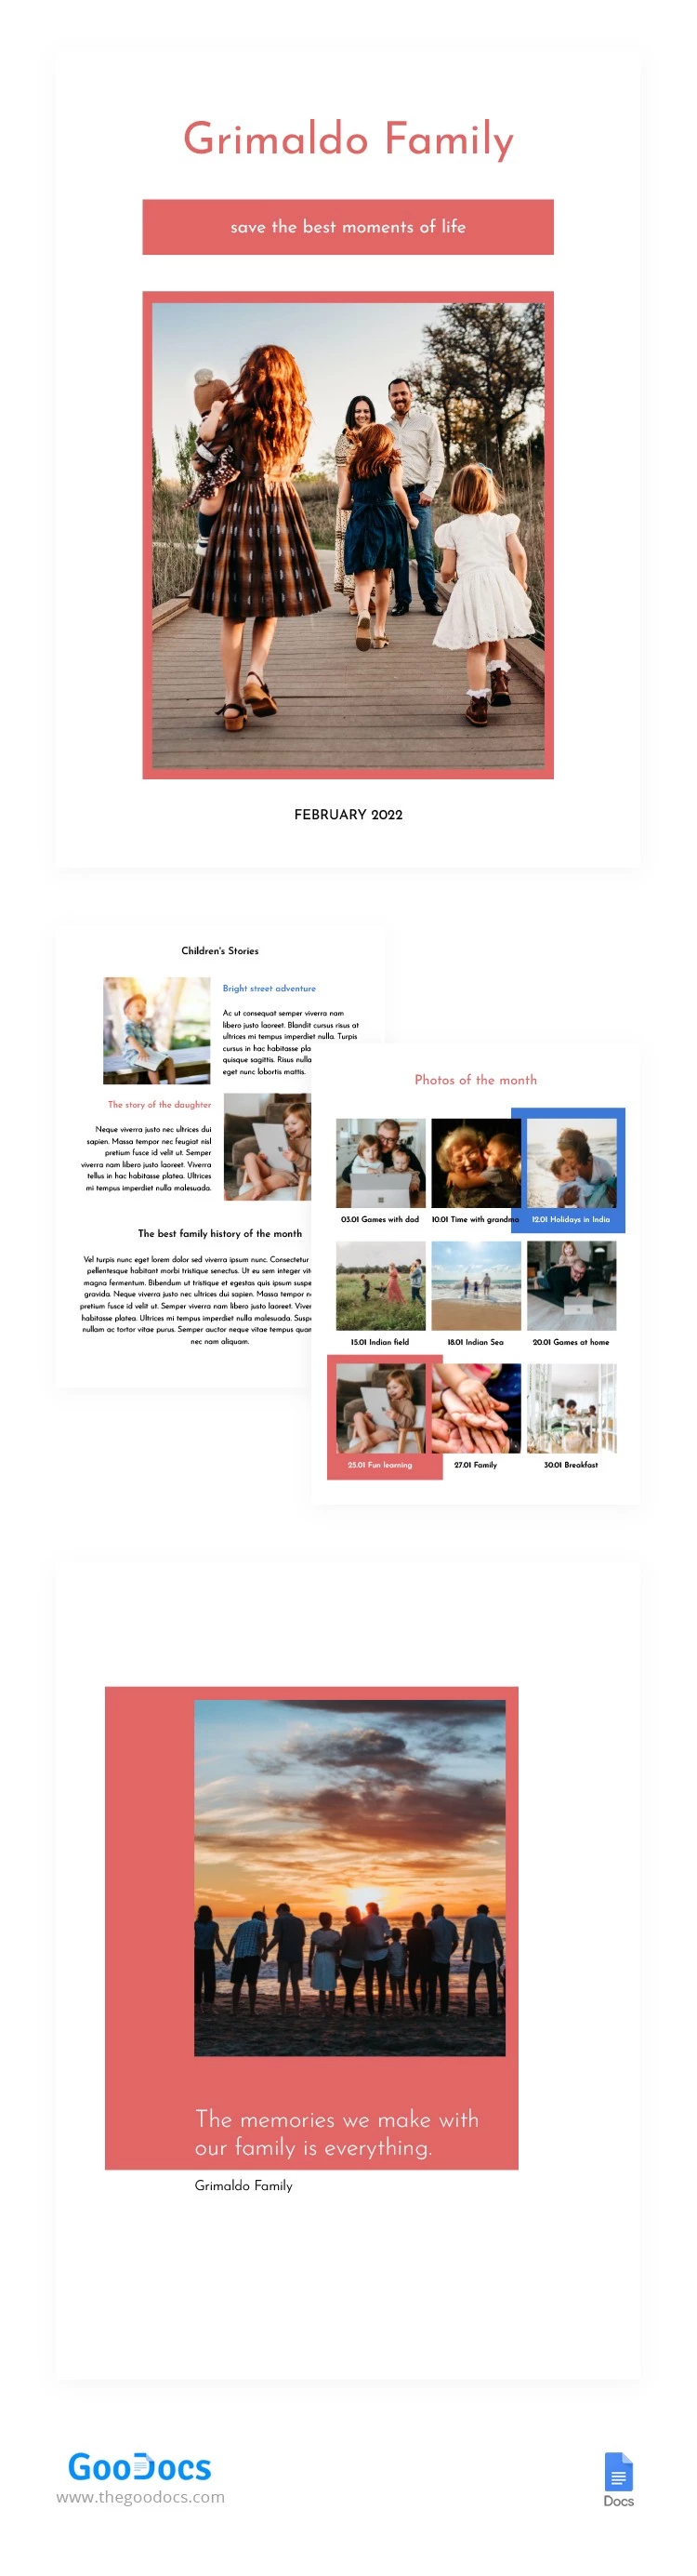 Álbum de fotos da família - free Google Docs Template - 10063489